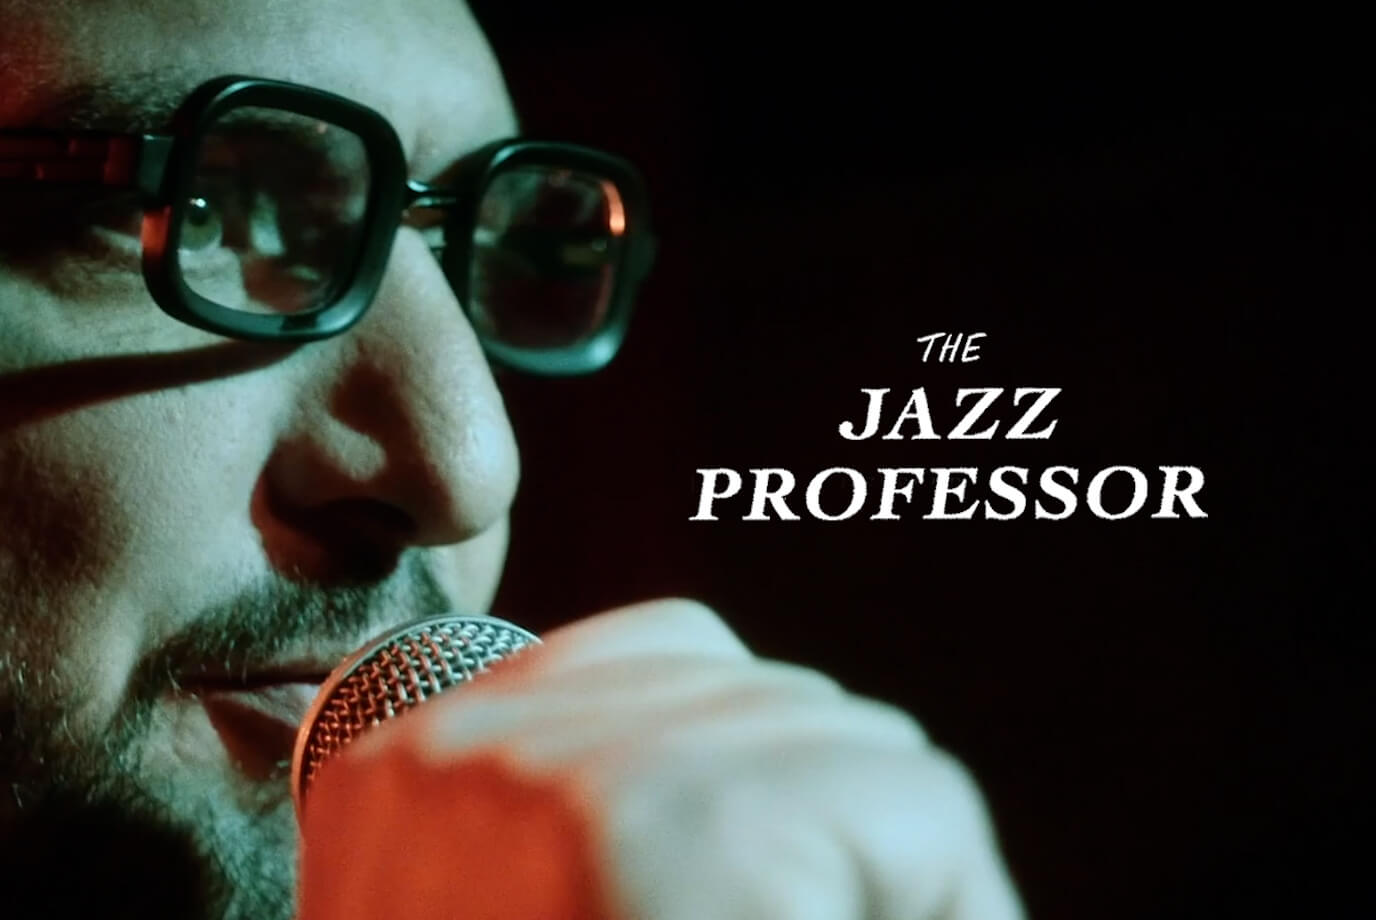 Reel image for The Jazz Professor